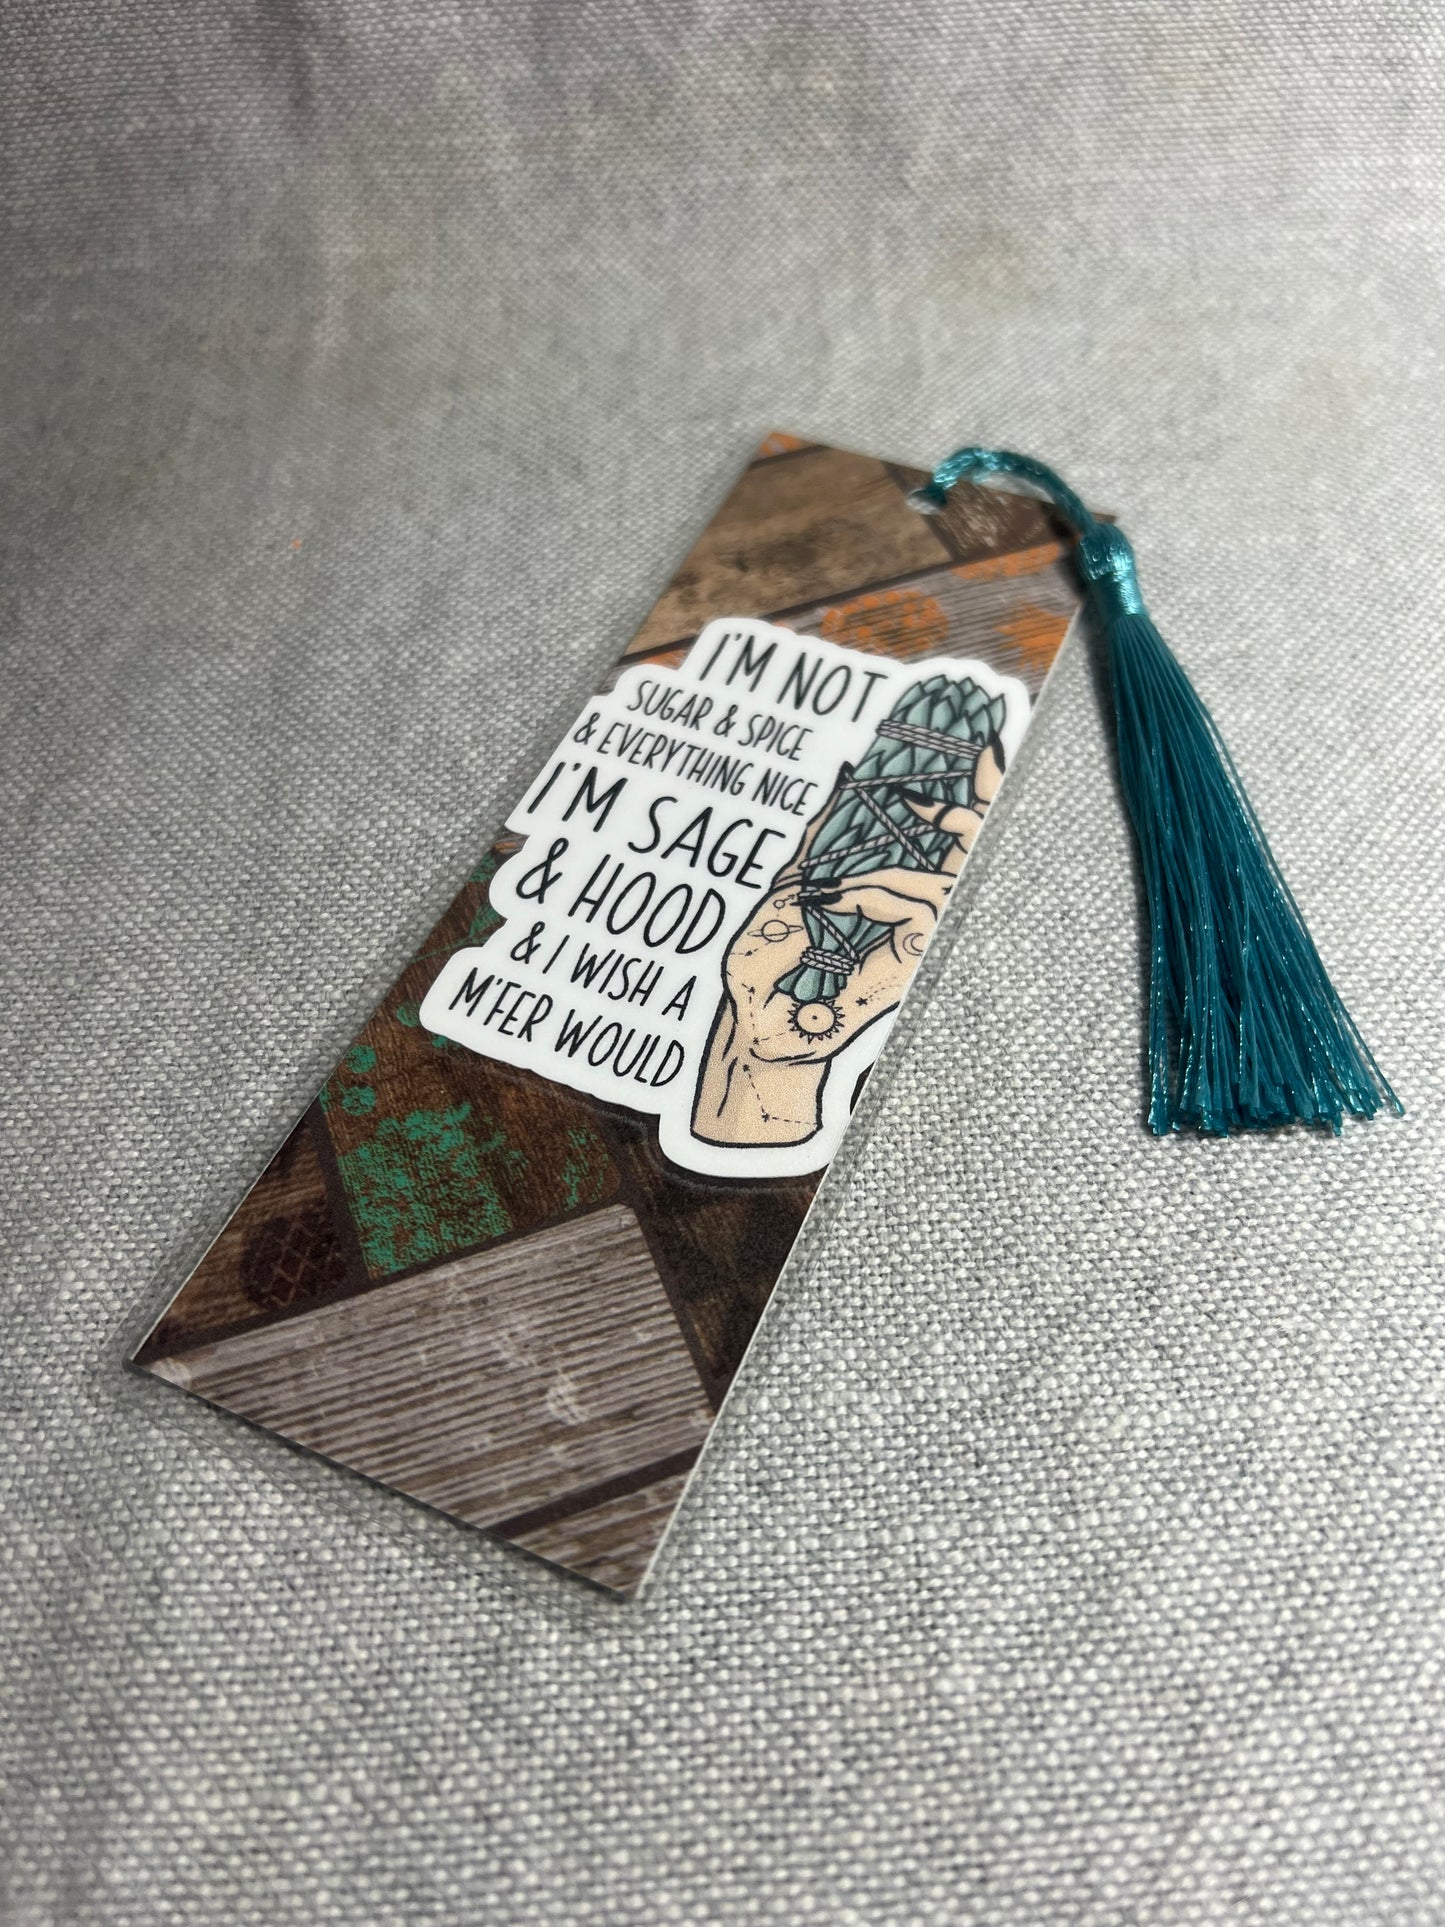 Sage and Hood (1) Bookmark